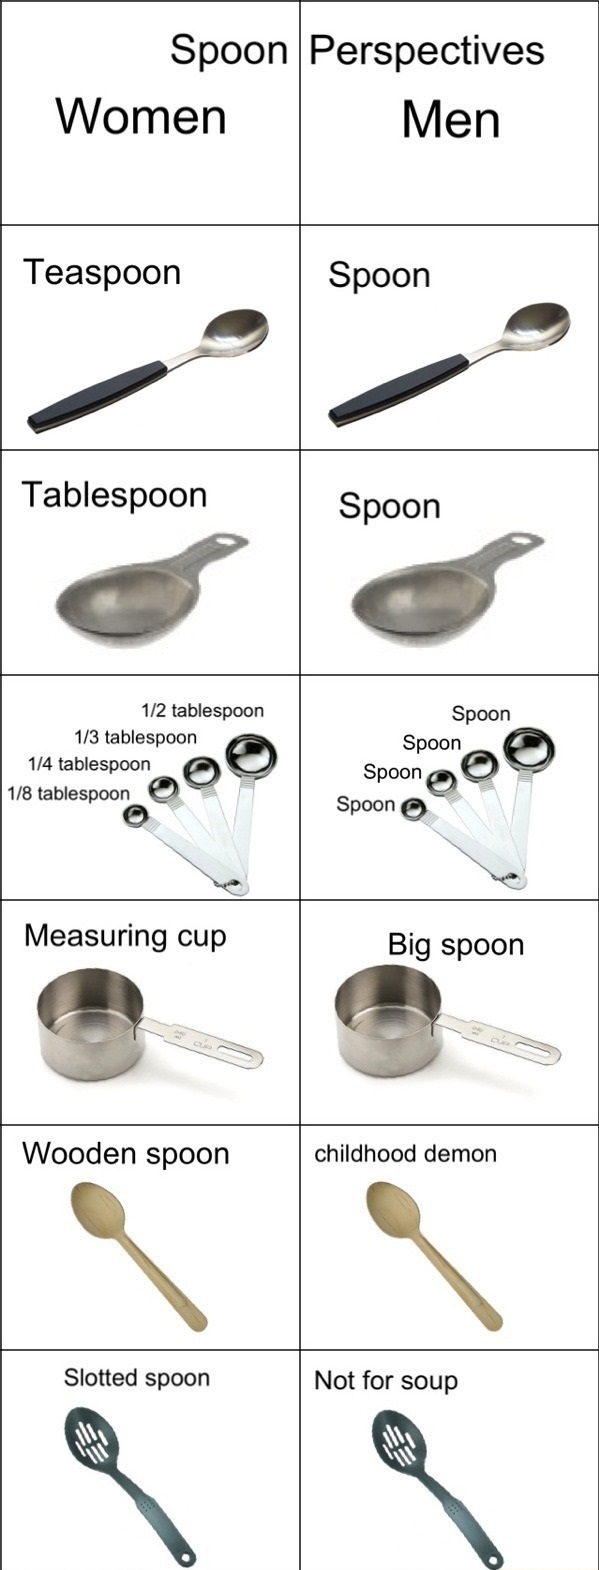 funny-picture-spoon-women-men